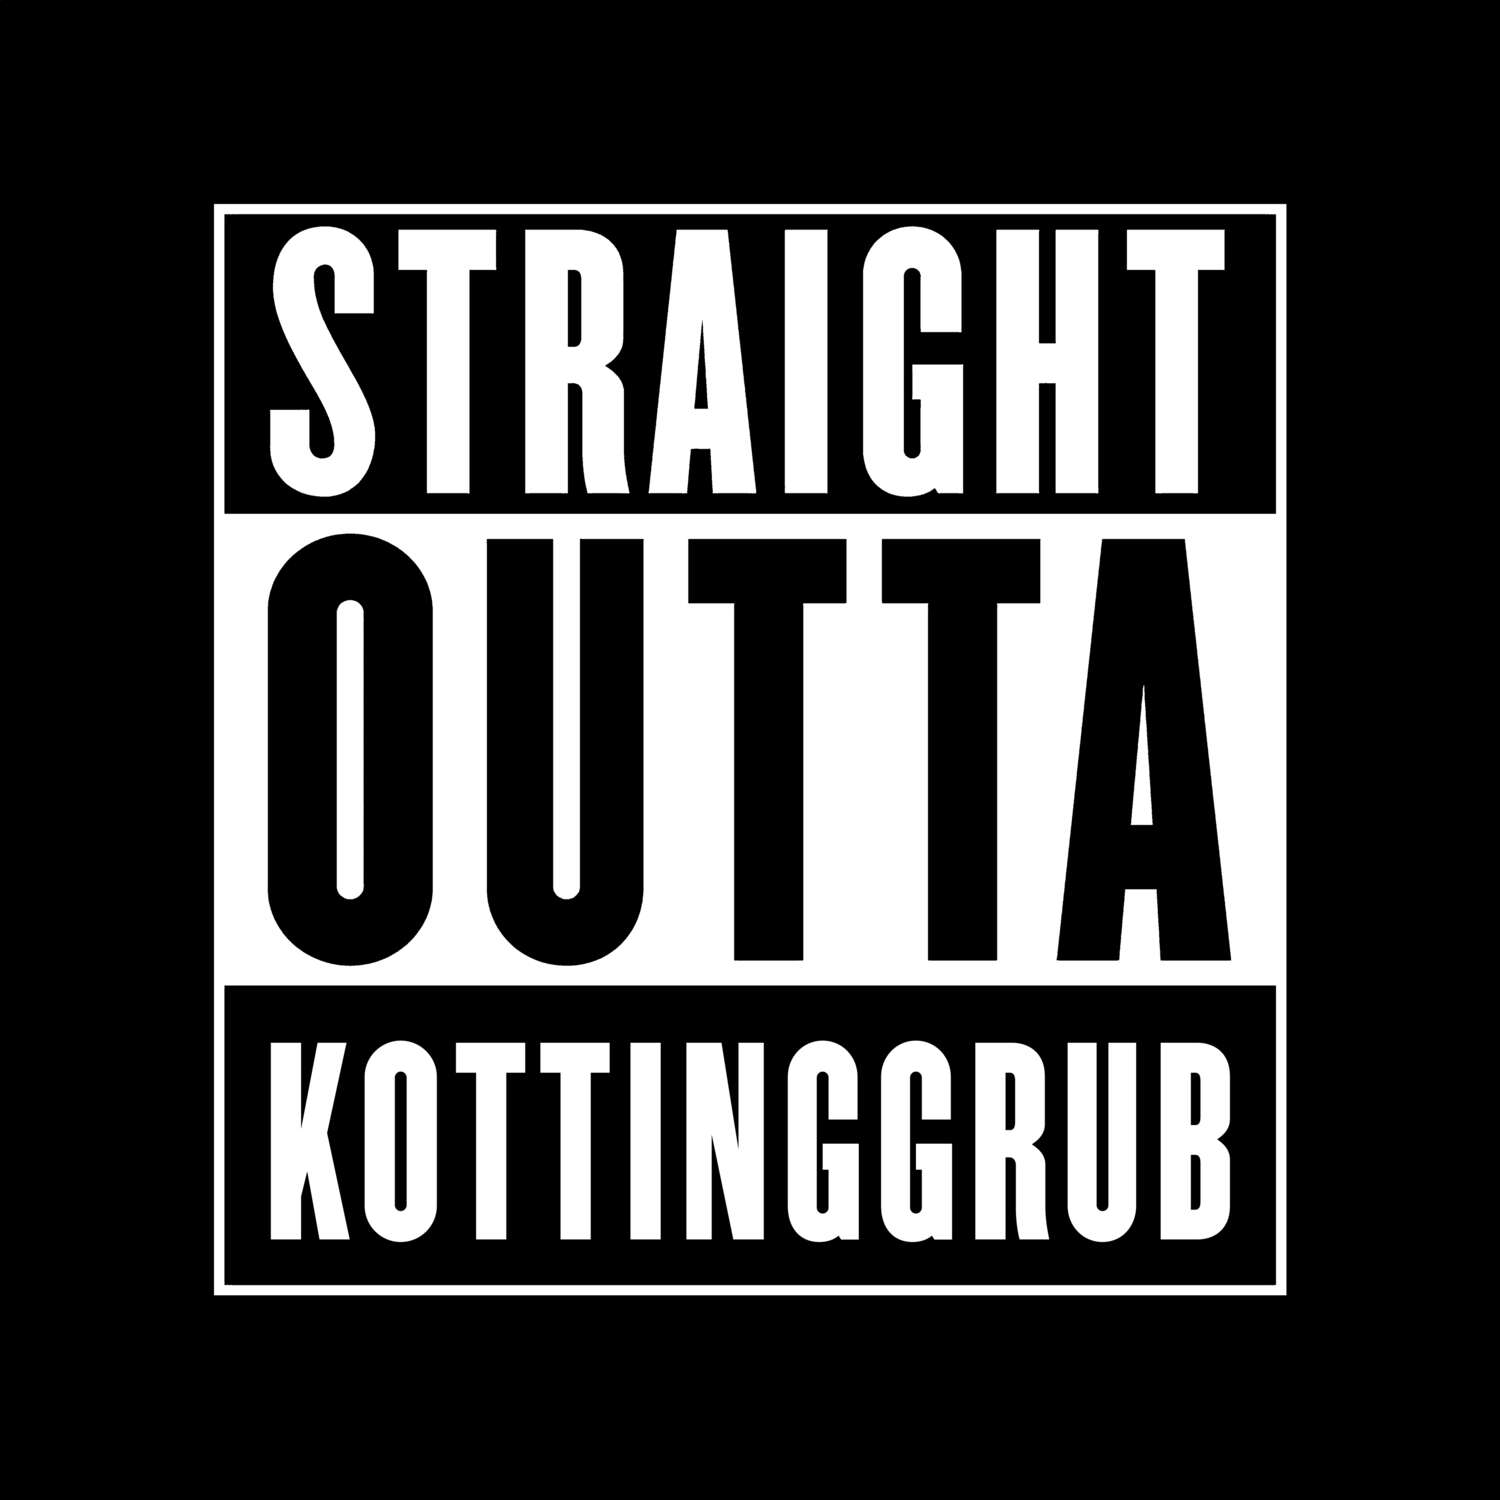 Kottinggrub T-Shirt »Straight Outta«